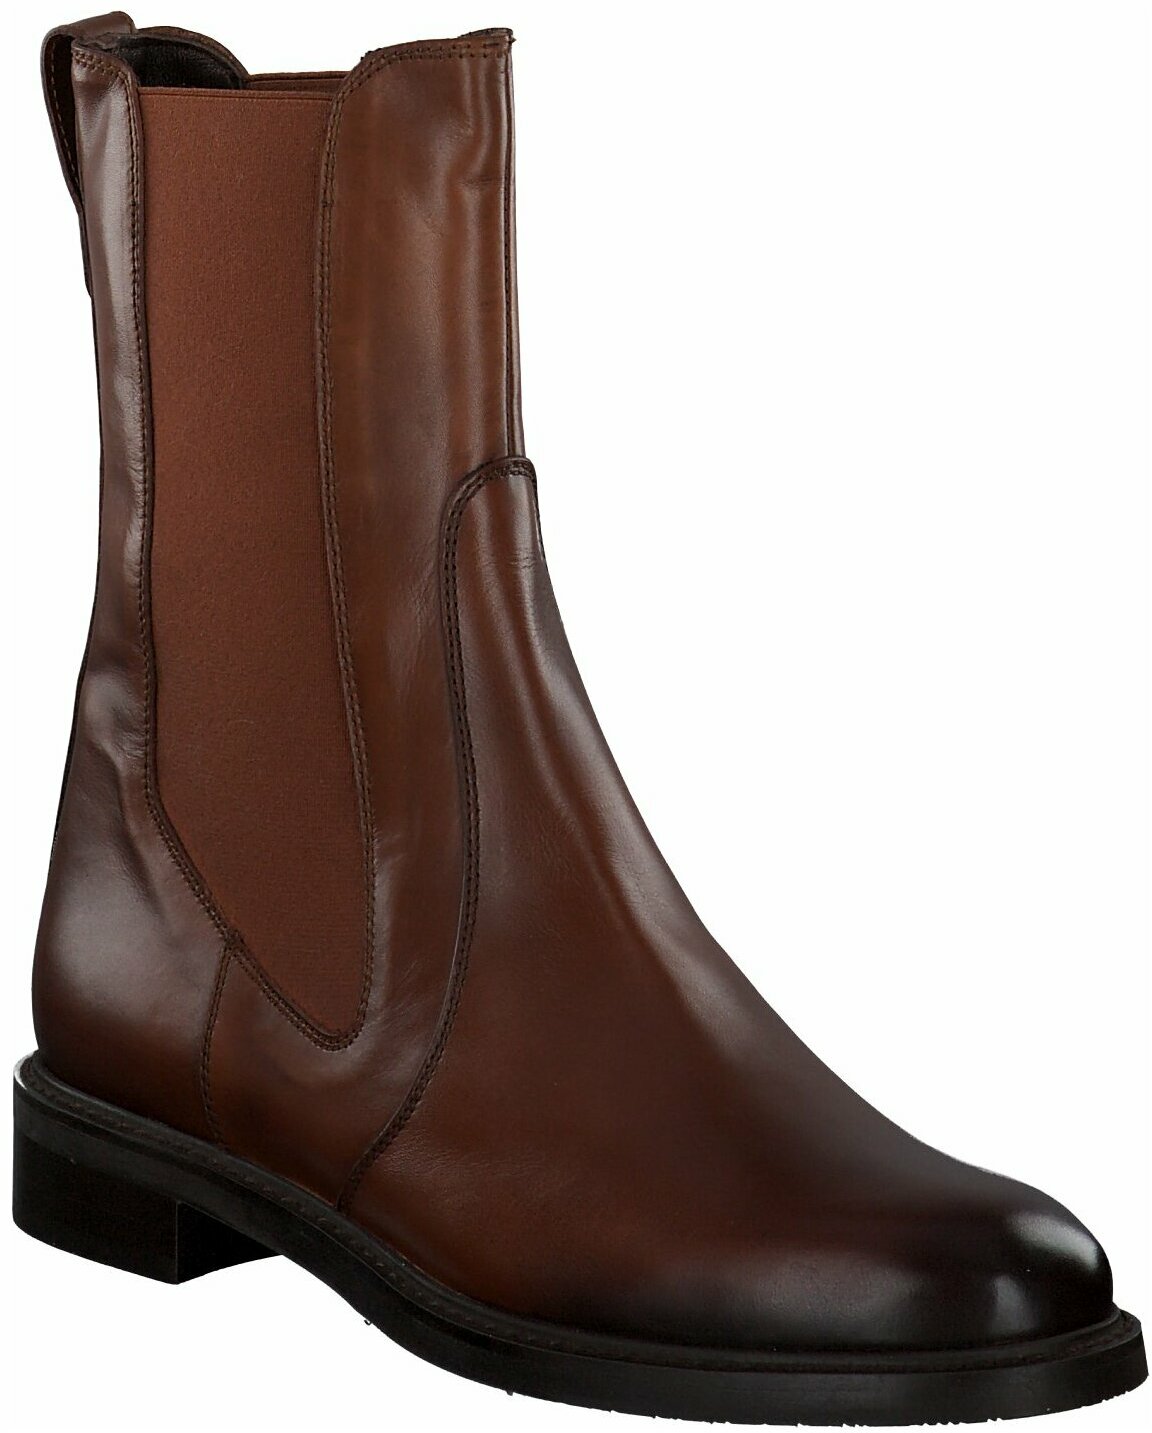 Prange Braune Chelsea Boots Aus Leder Fur Damen Von Pertini Online Shoppen